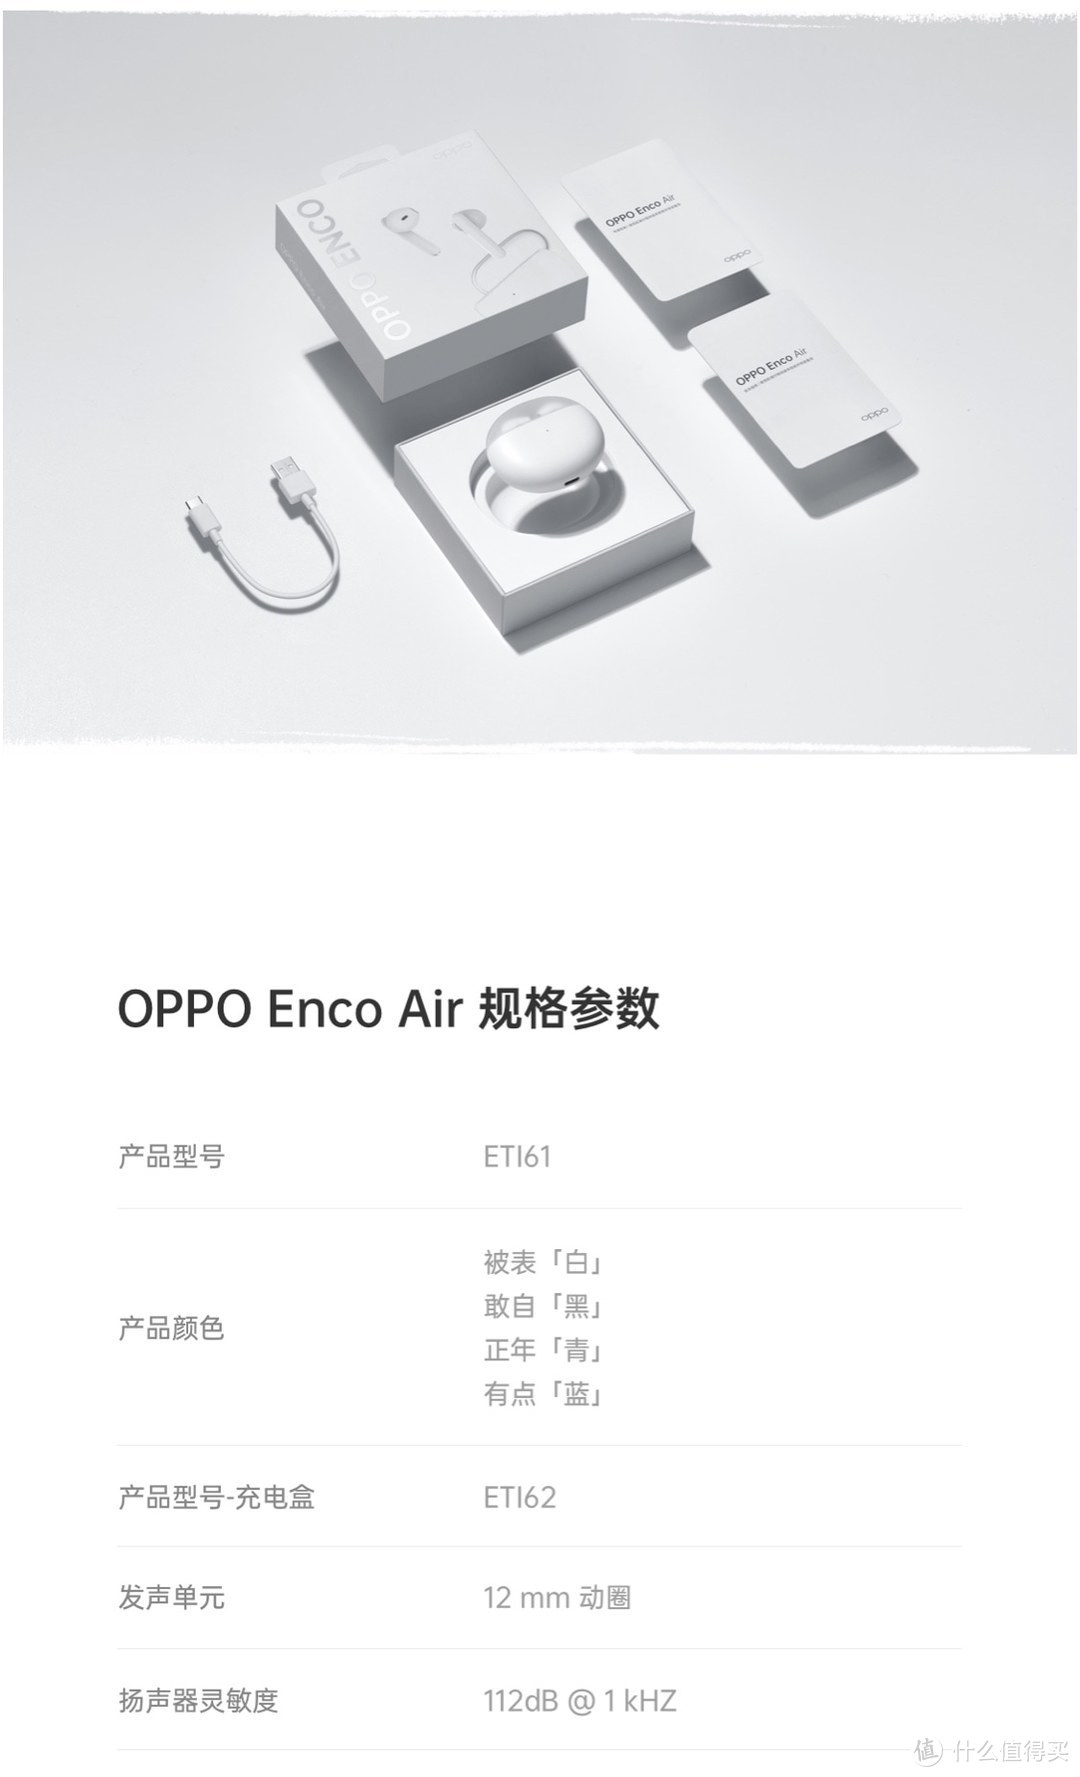 OPPO 发布 Enco Air 真无线耳机，莱茵高性能低延迟认证、“果冻”收纳仓、24小时总续航